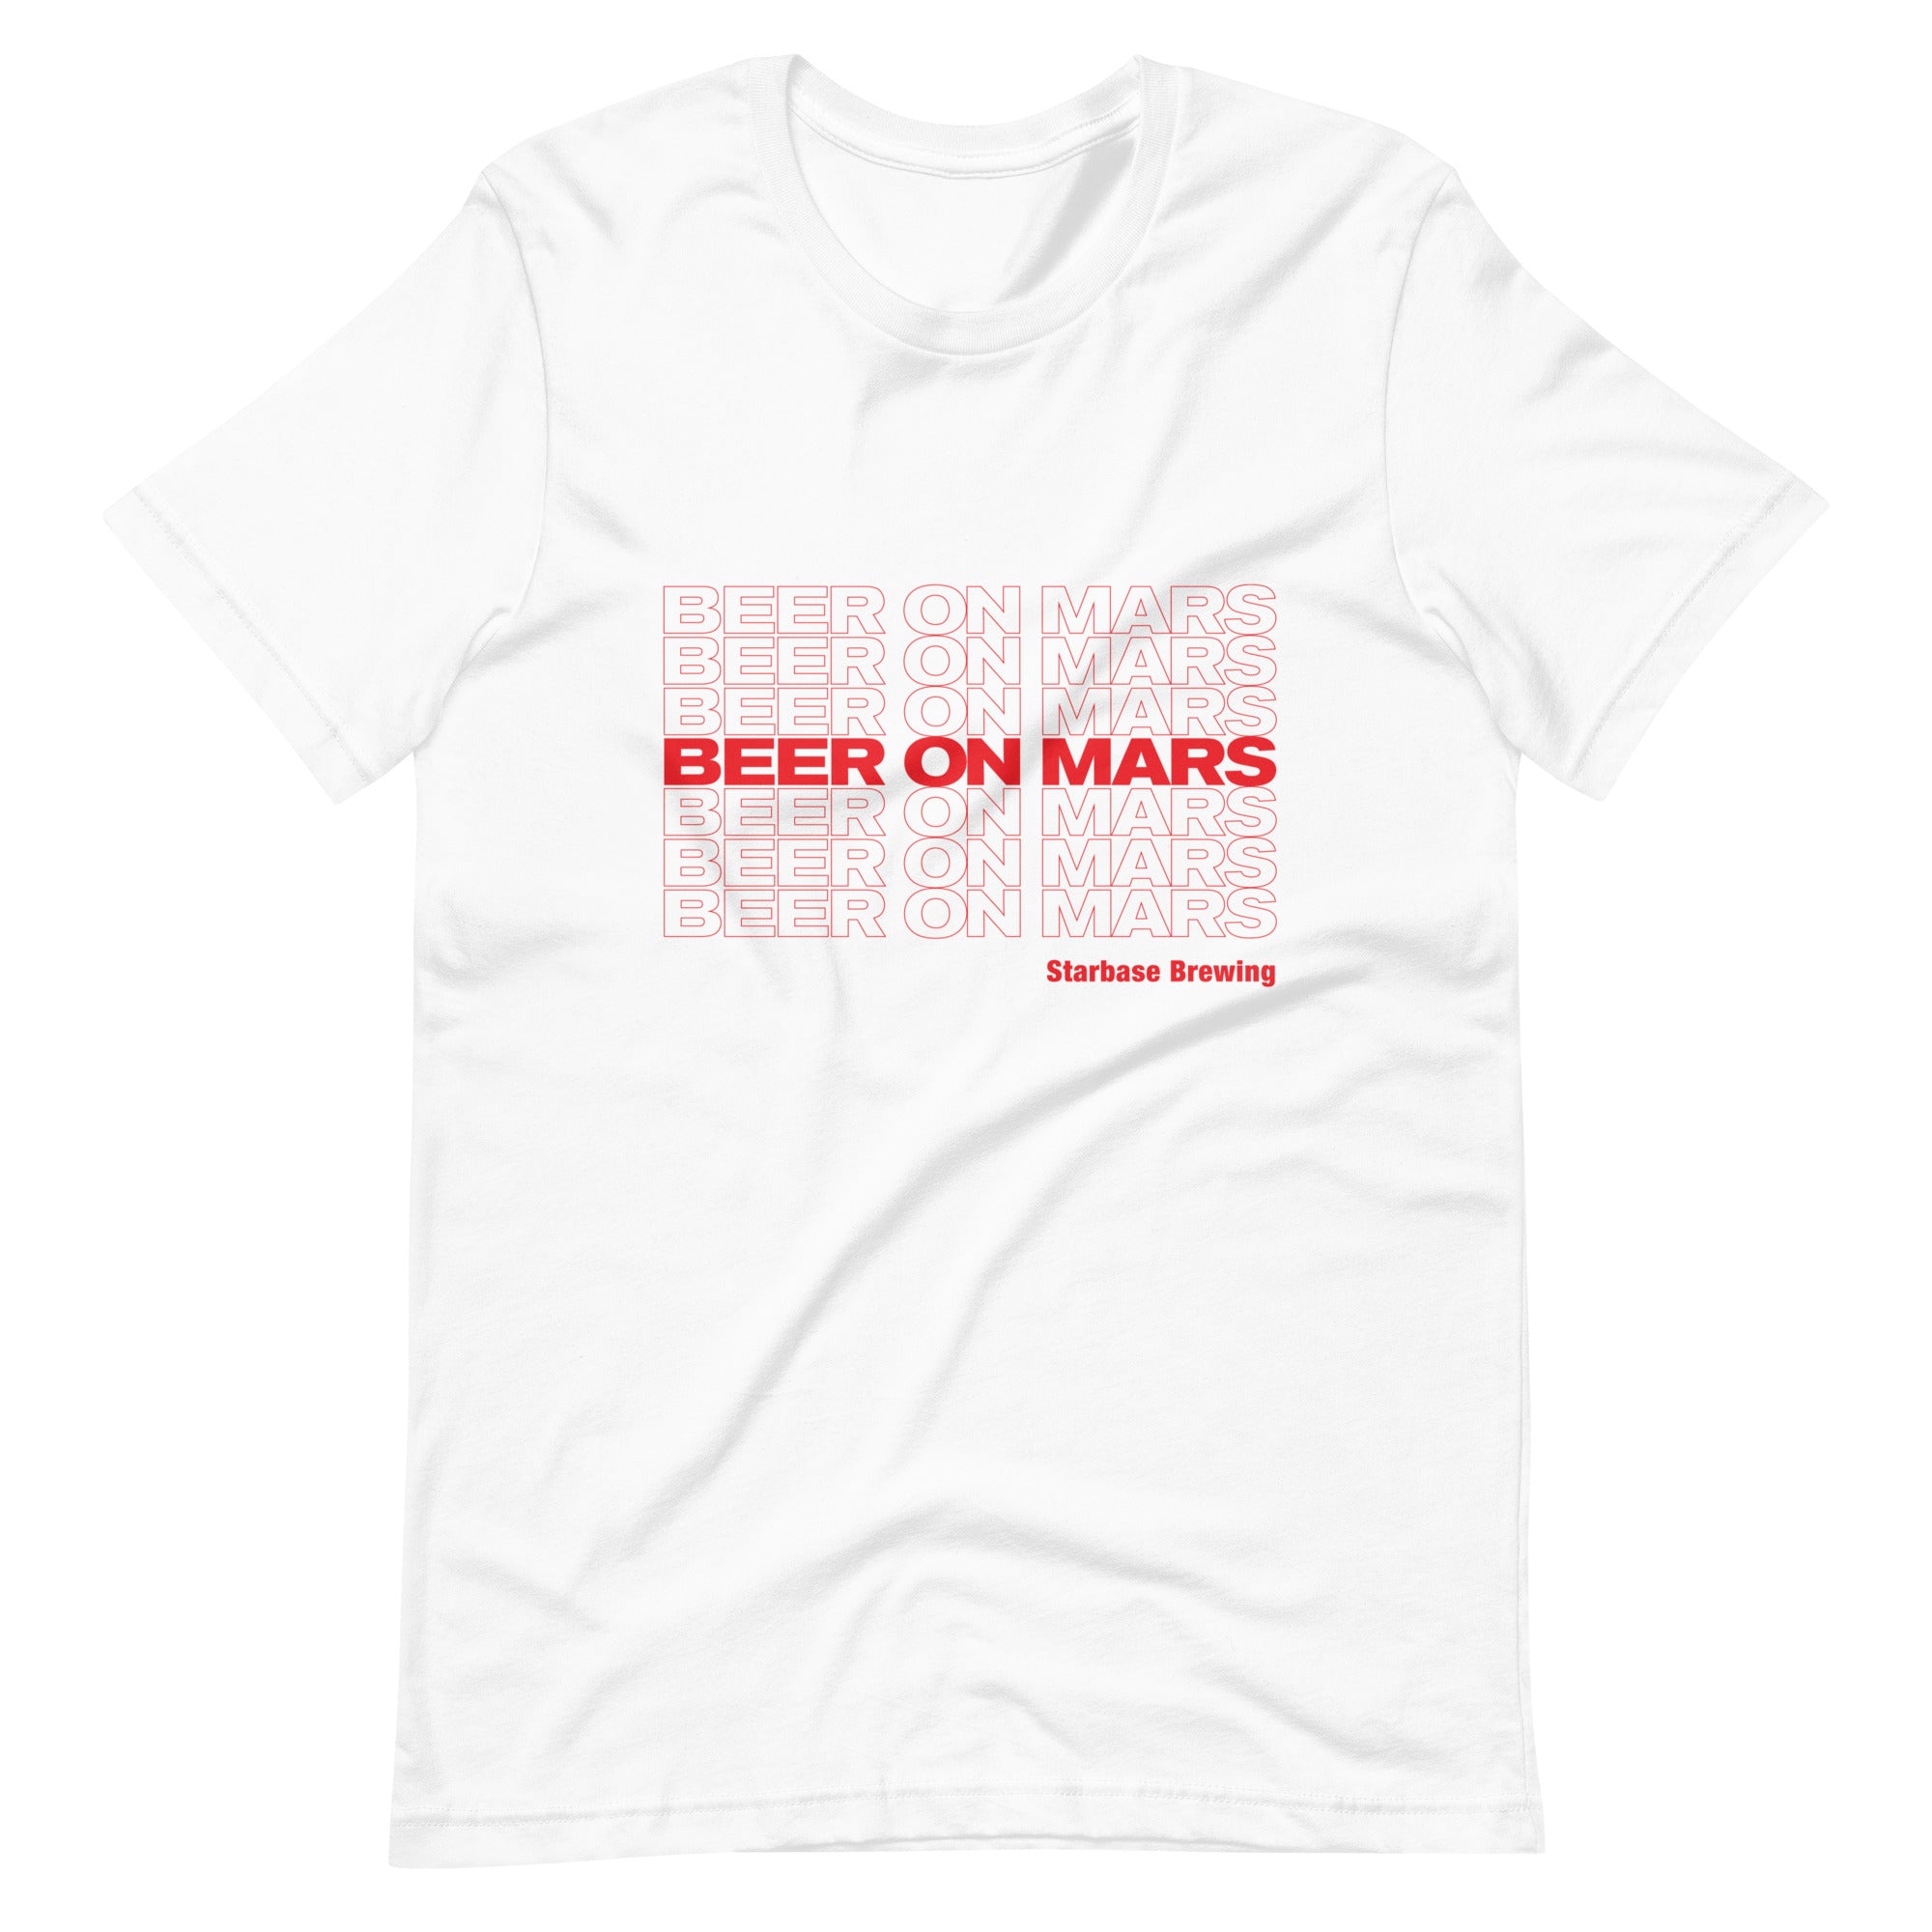 Beer on Mars Shirt